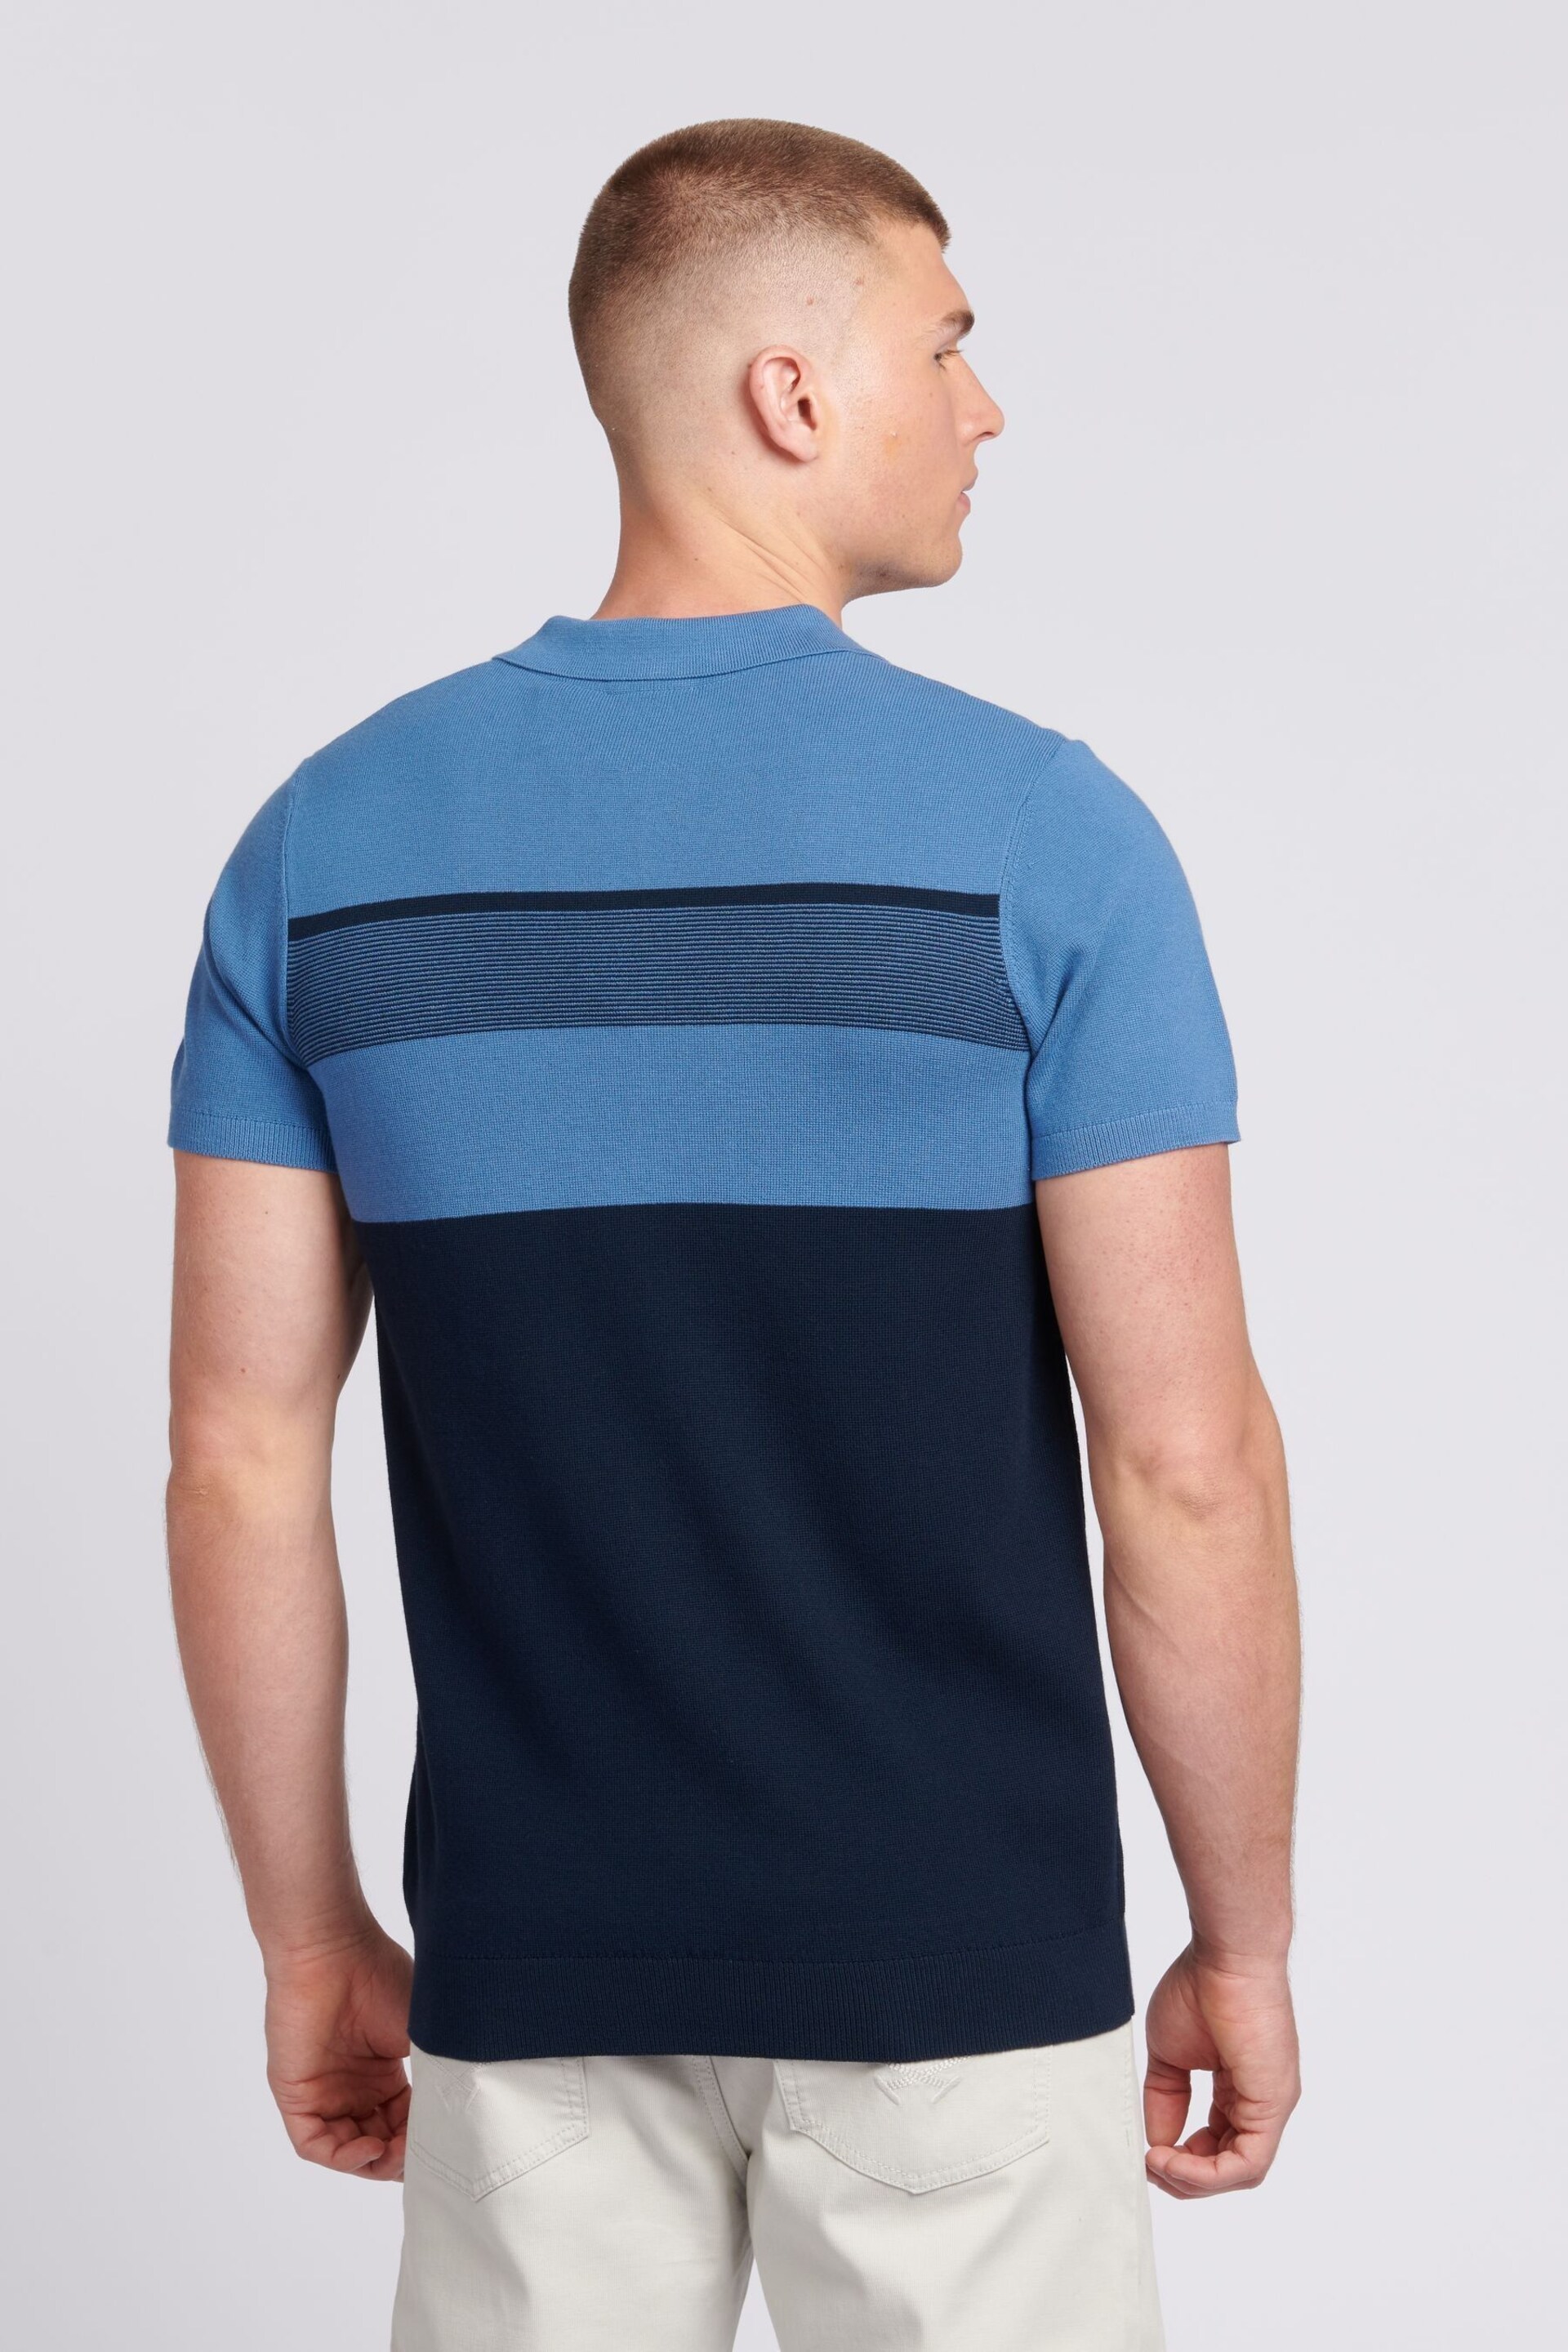 U.S. Polo Assn. Mens Regular Fit Blue Stripe Knit Polo Shirt - Image 4 of 7